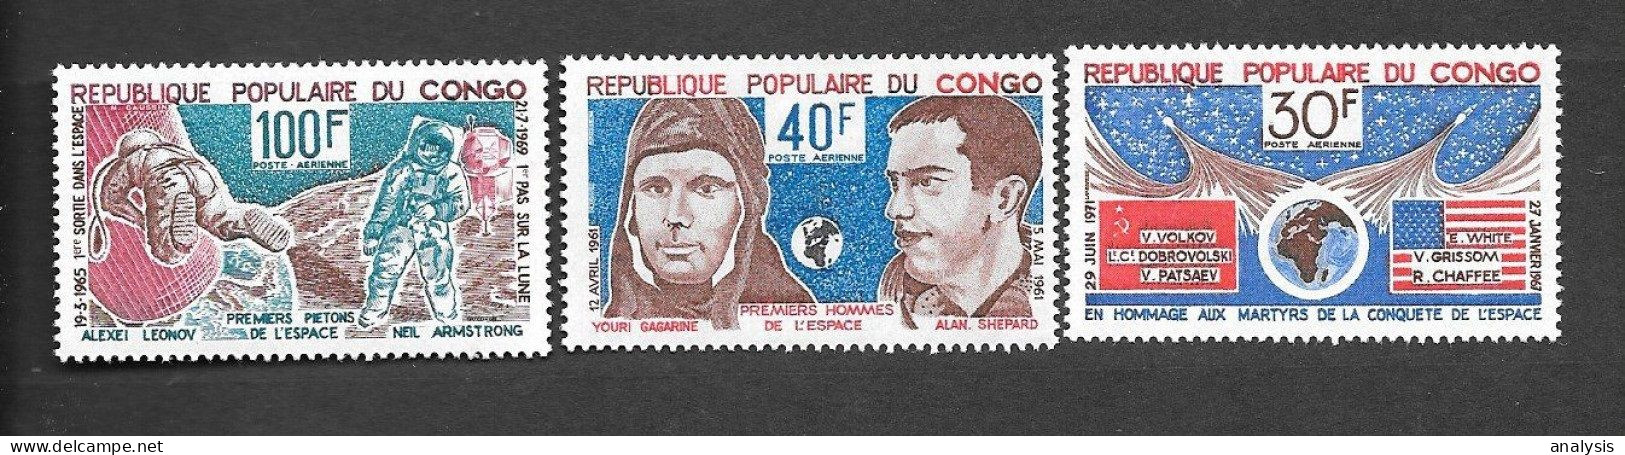 Congo Brazzaville Space 3 Stamps 1973 MNH. Gagarin "Vostok 1" "Apollo 11" "Soyuz 11" "Apollo 1" Accident - Africa